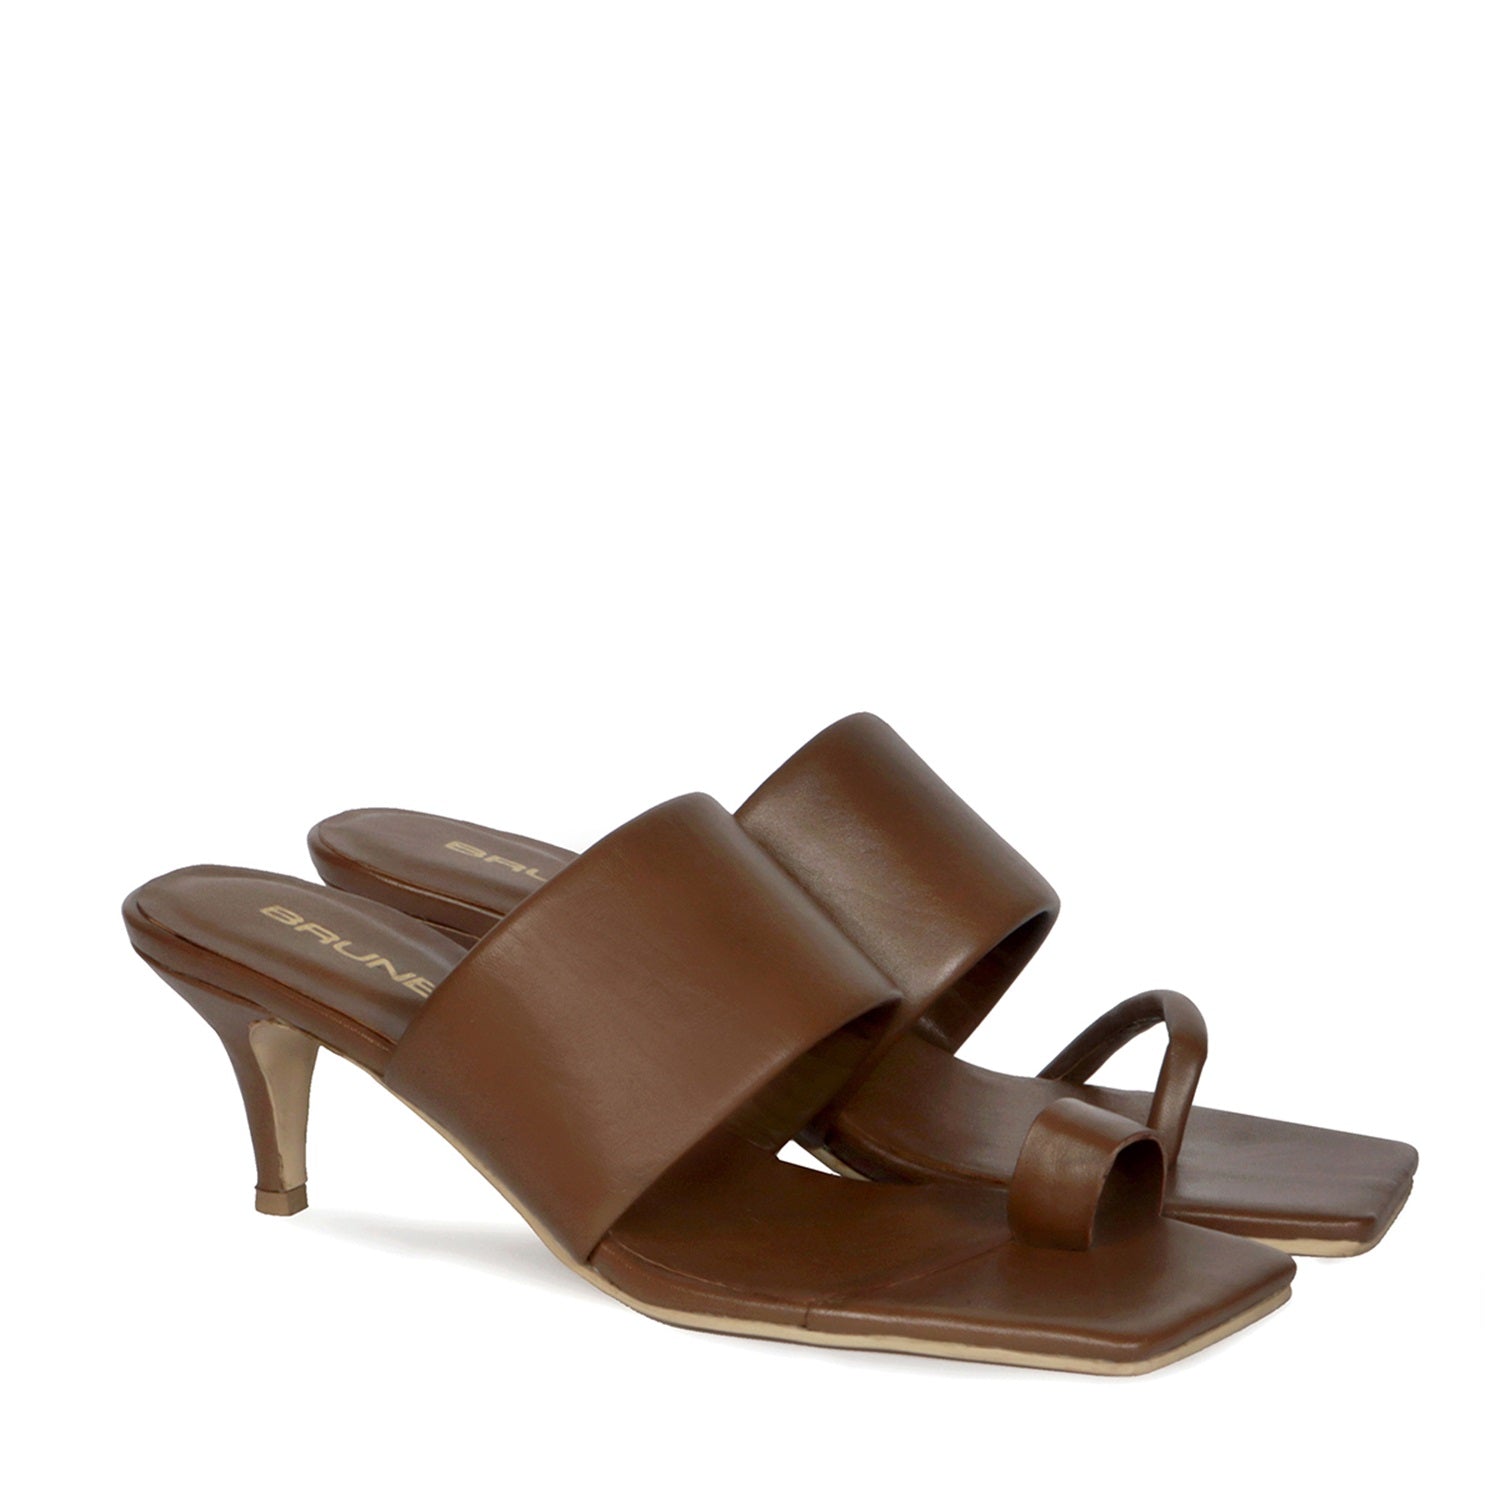 Tan & Dark Brown Leather Kolhapuri Sandals